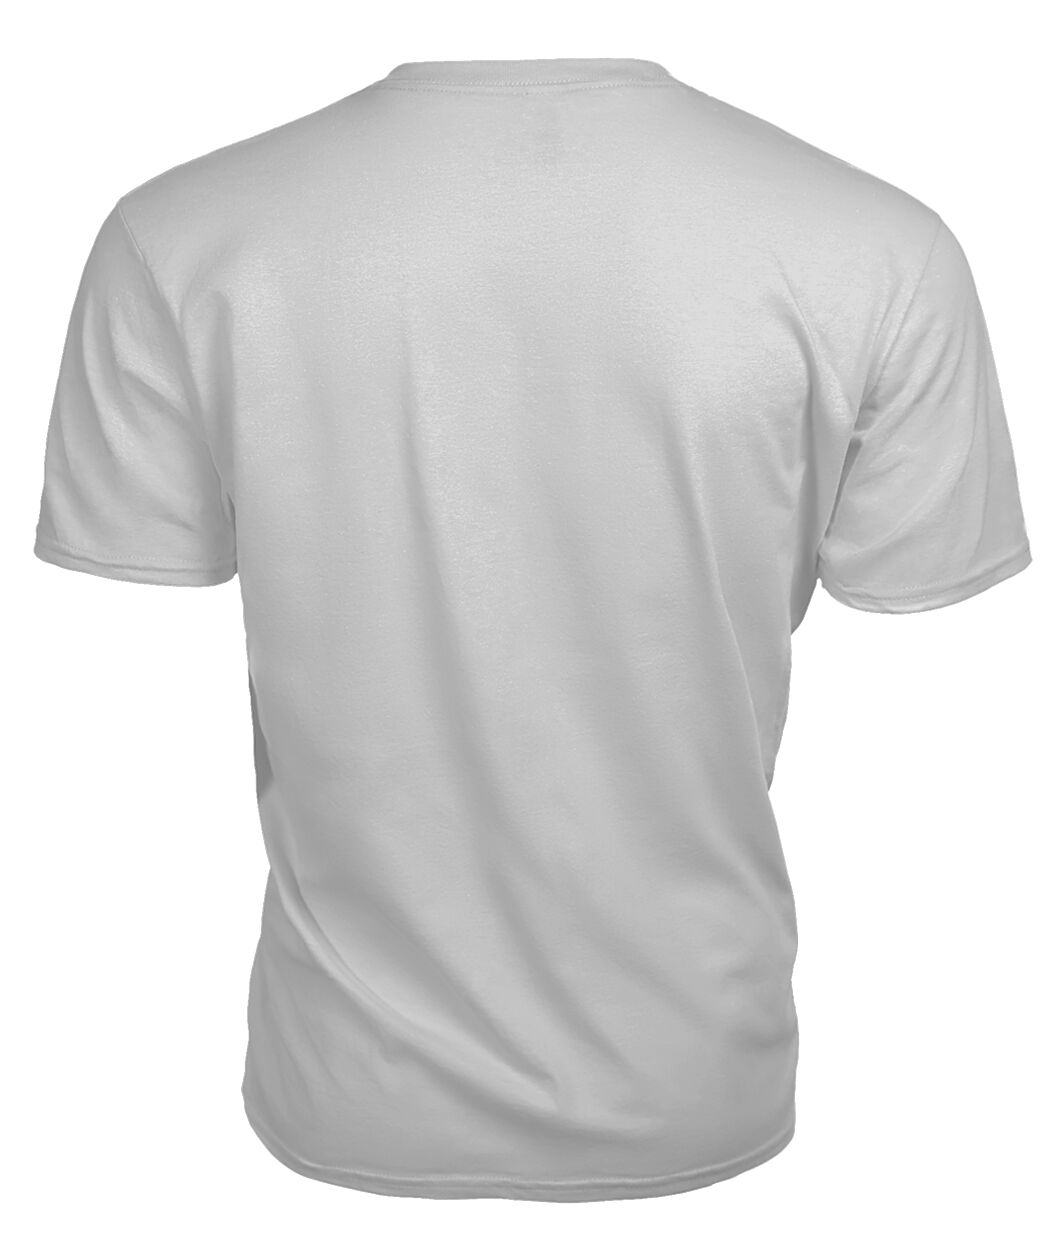 Brisbane Family Tartan - 2D T-shirt